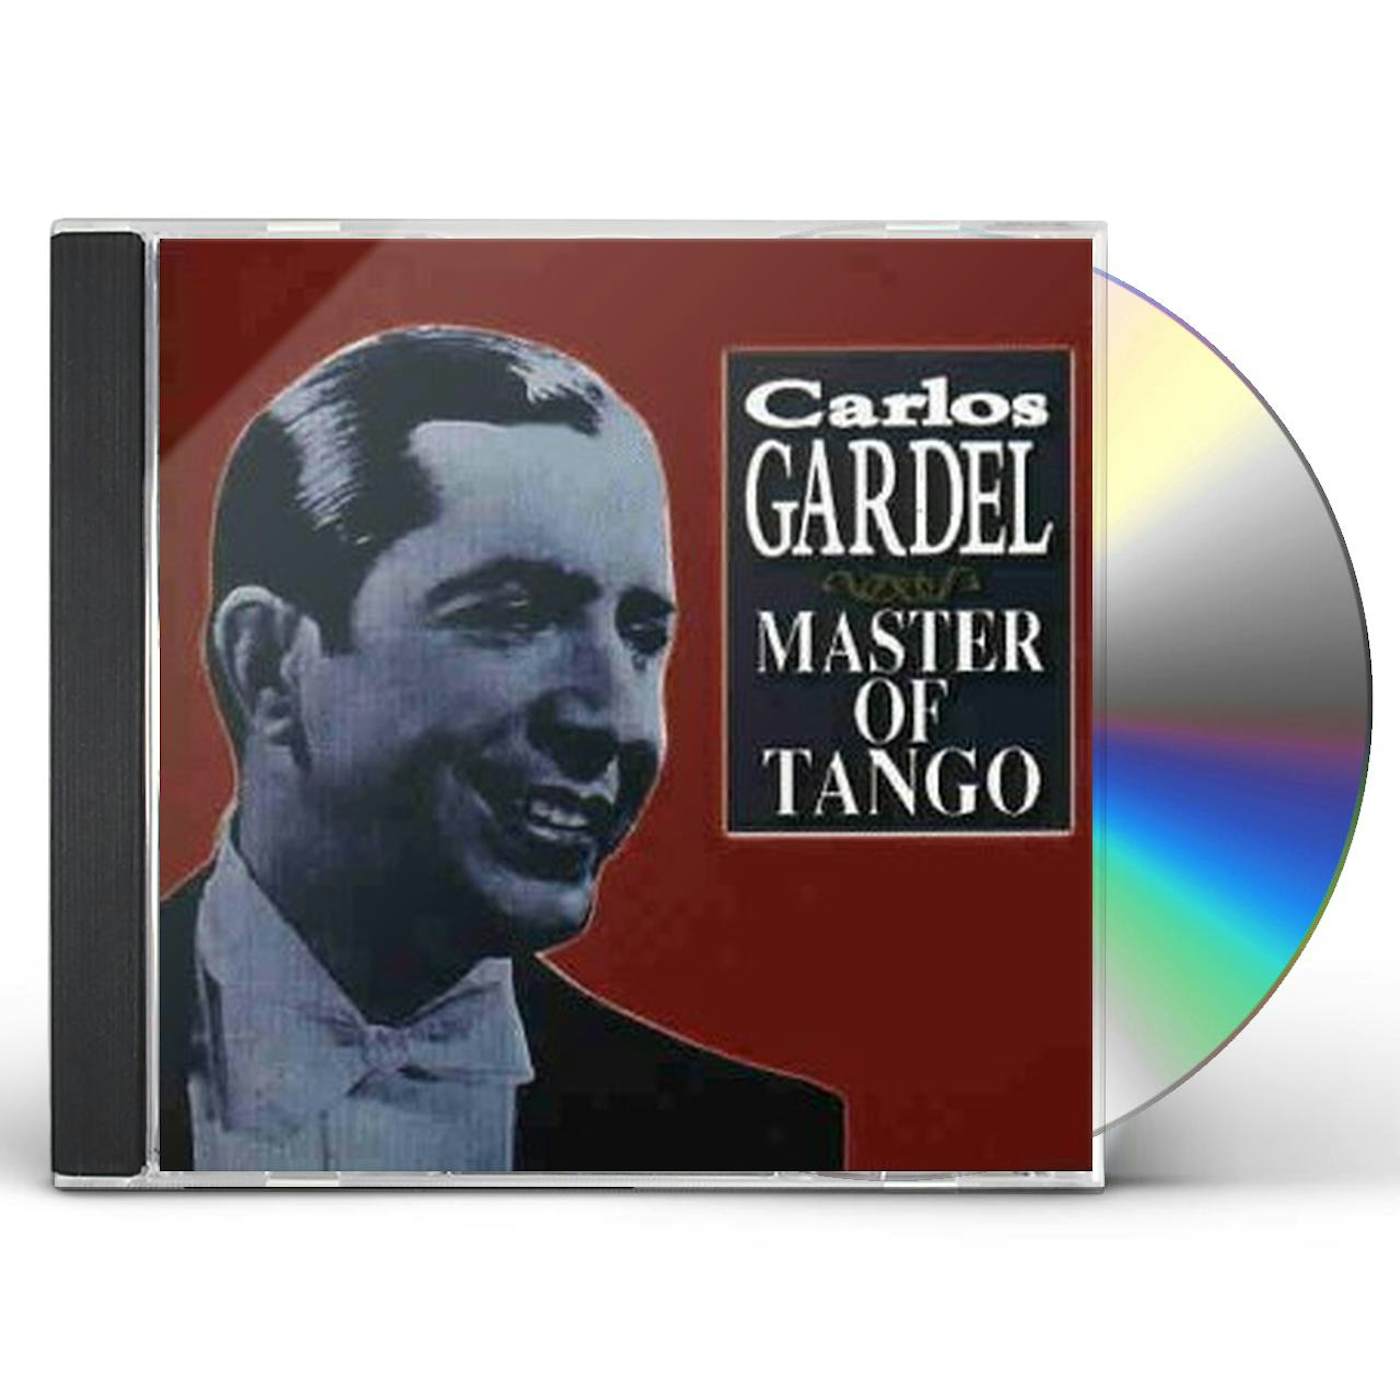 Carlos Gardel MASTER OF TANGO CD